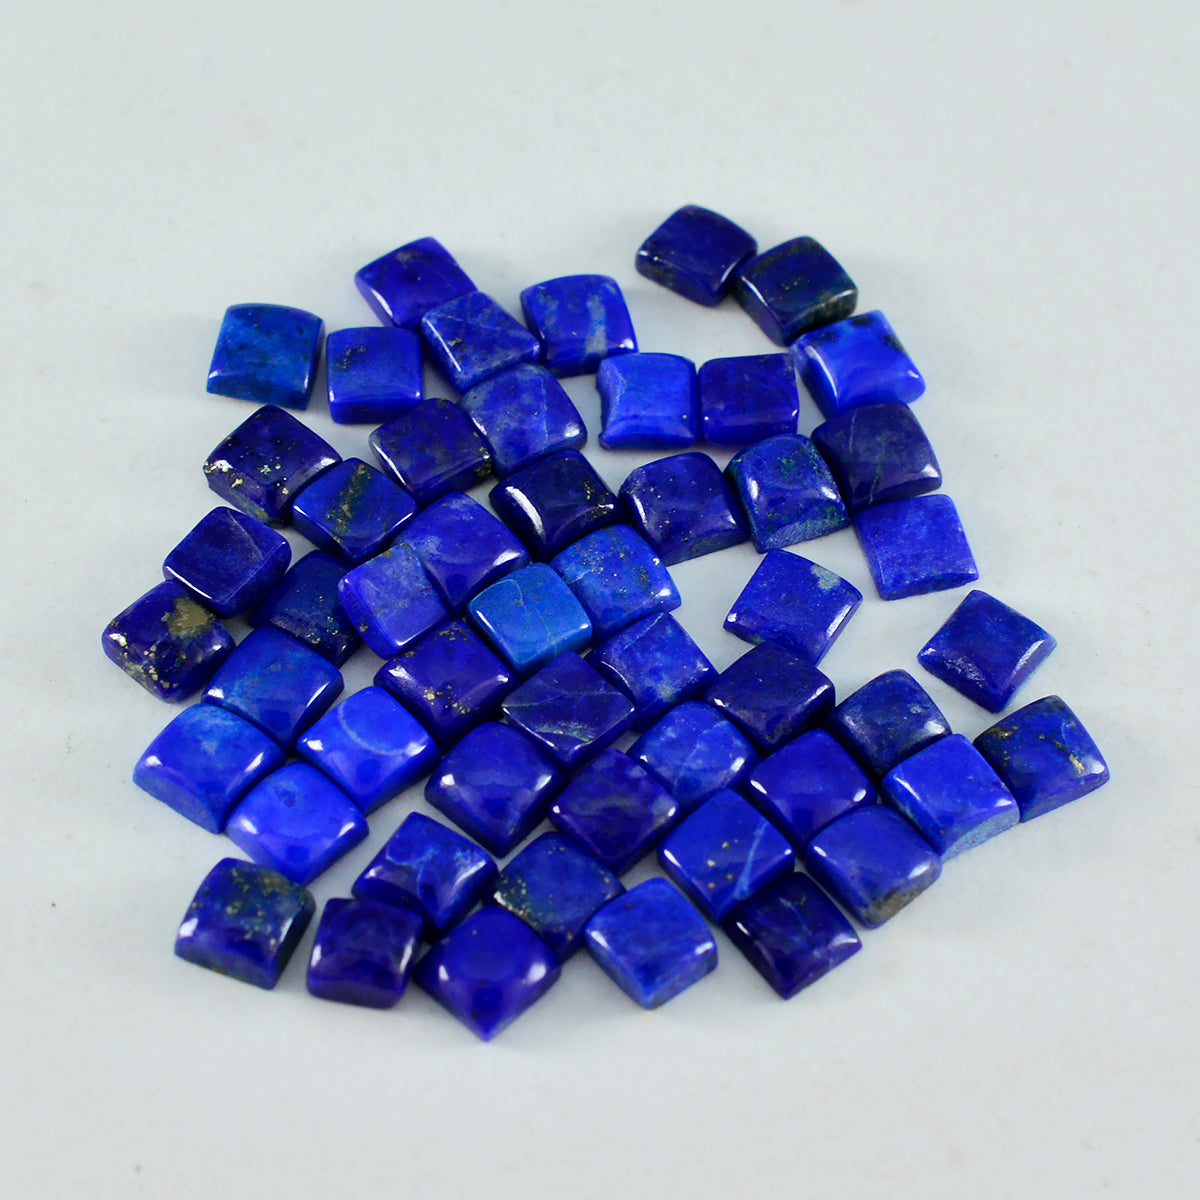 Riyogems 1PC Blue Lapis Lazuli Cabochon 5x5 mm Square Shape superb Quality Gem